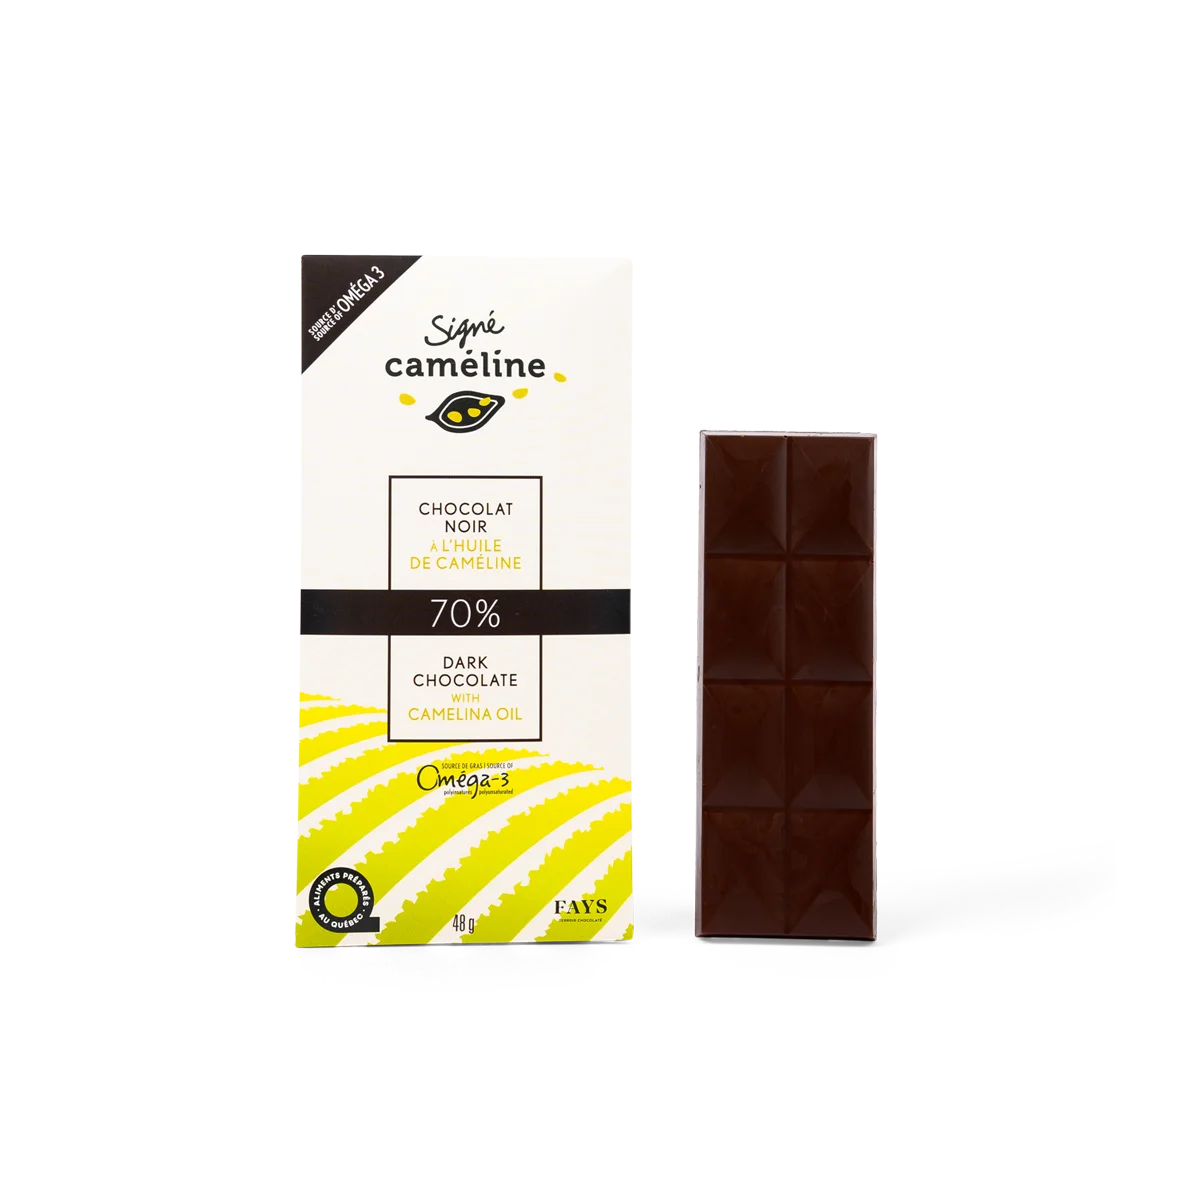 Camelina black chocolate 70% camelina oil